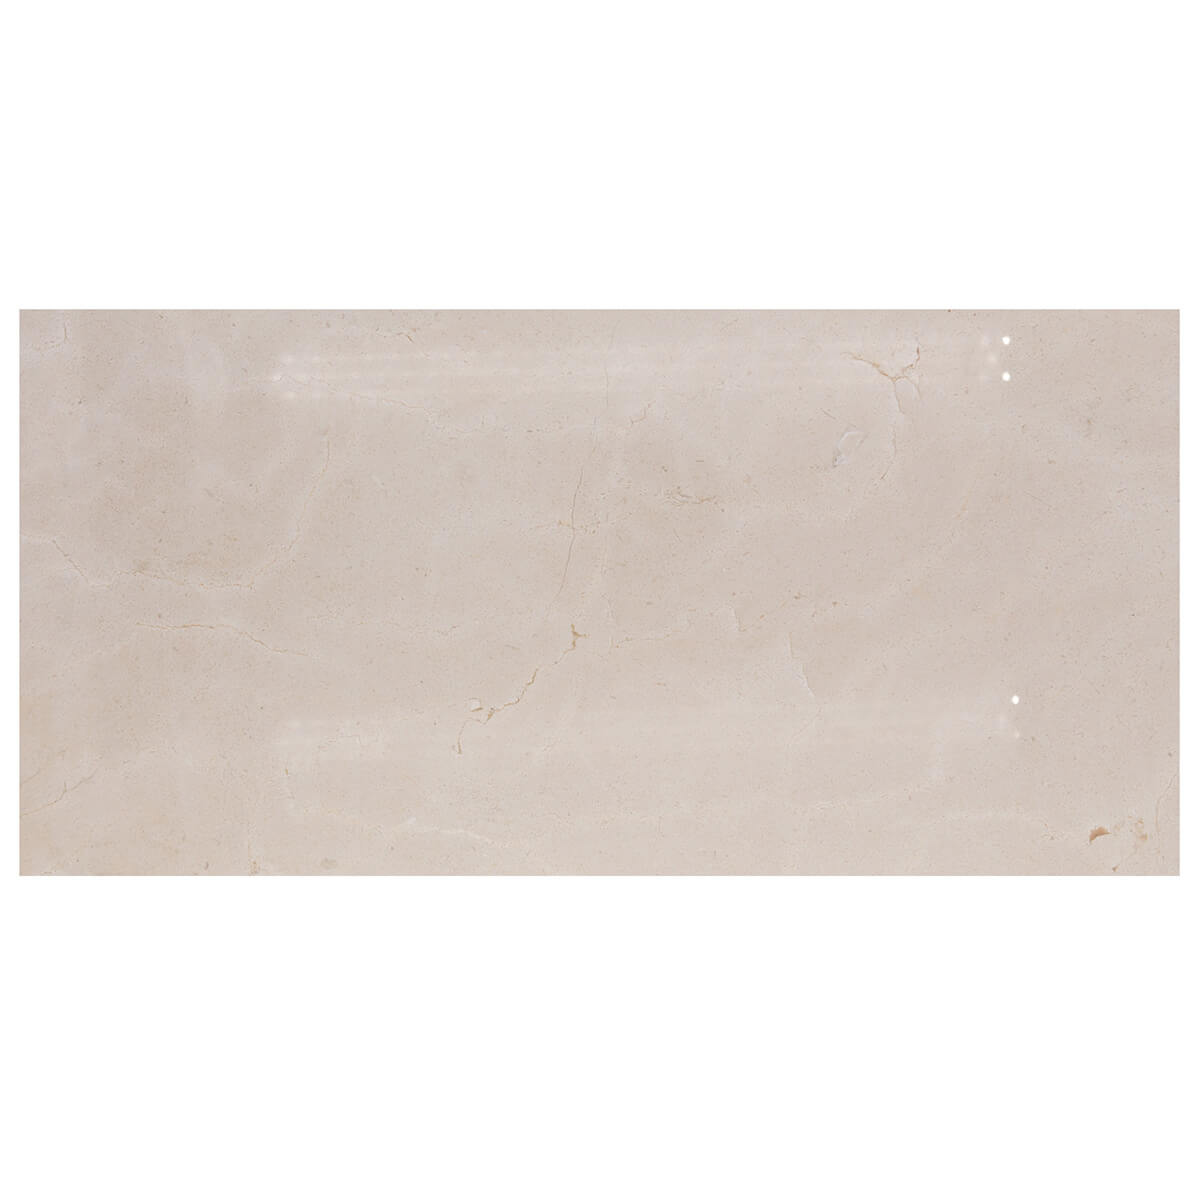 haussmann crema marfil limestone rectangle natural stone field tile 12x24 polished